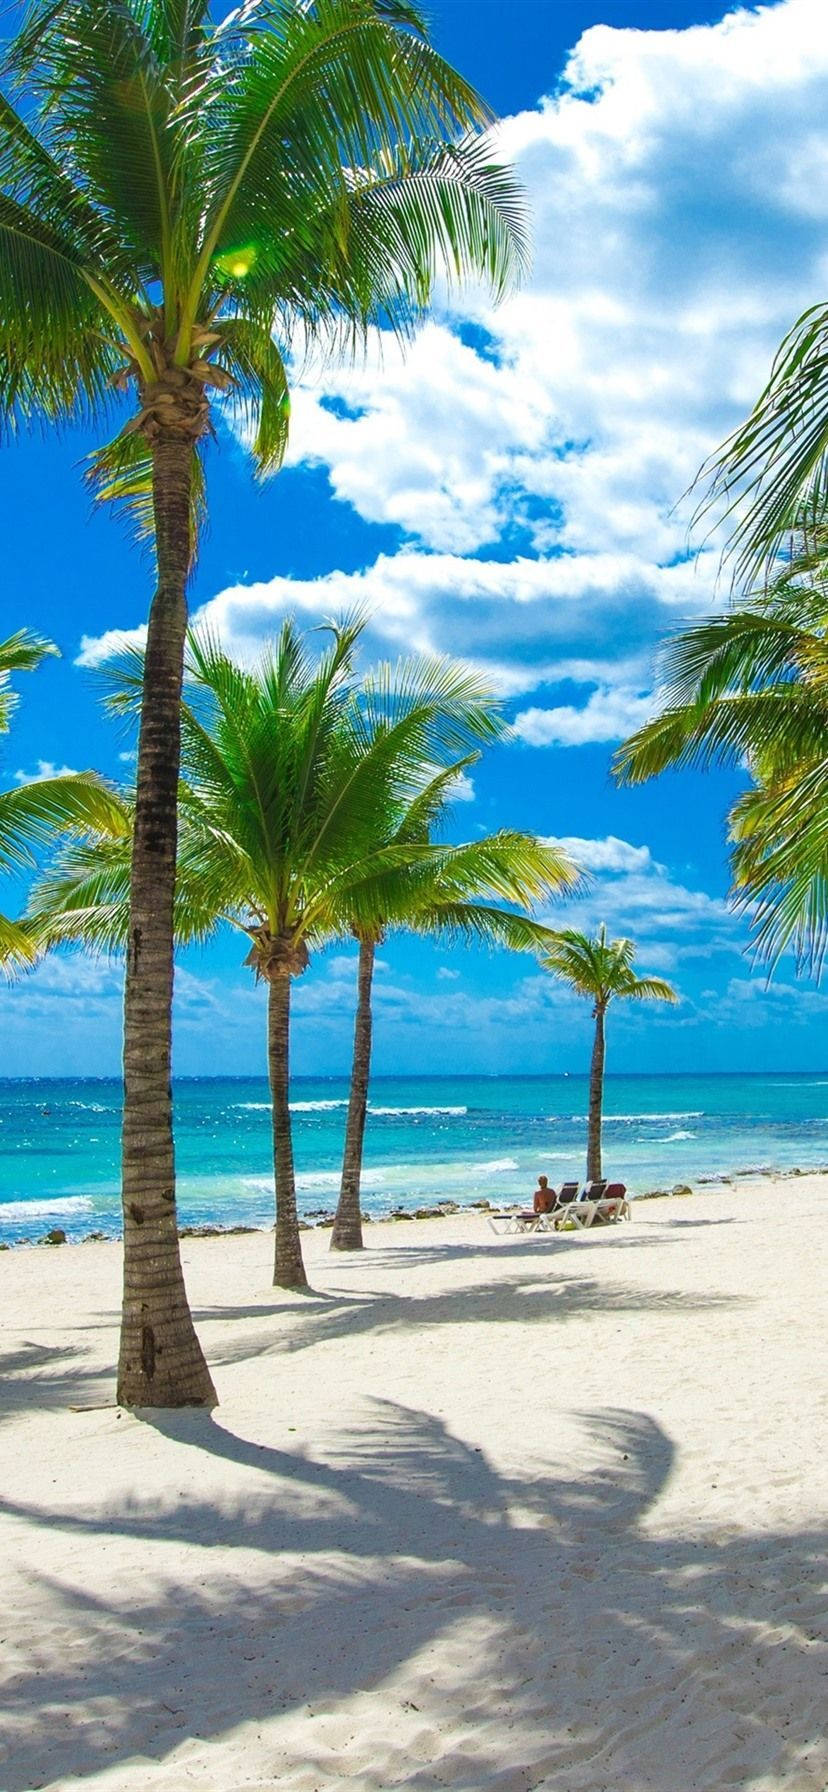 Download 4k Iphone Coconut Trees At Beach Shore Wallpaper 